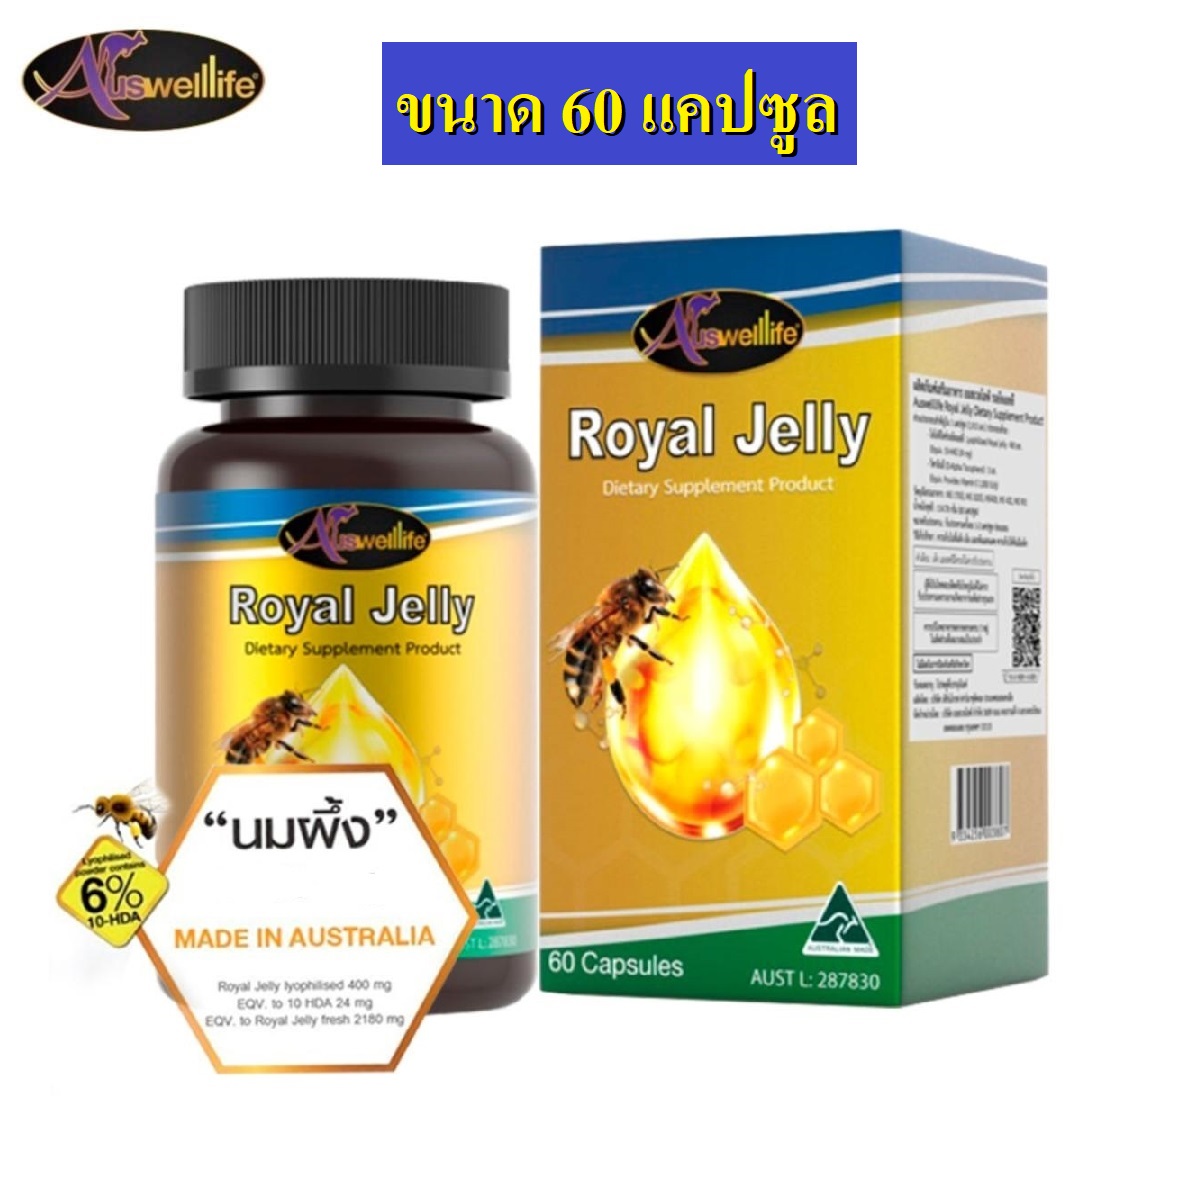 Auswelllife Royal Jelly นมผึ้งเกรดพรีเมี่ยม 100% บำรุงประสาทและสมอง ต้านความเครียด นอนไม่หลับ 1 กระปุก (60 แคปซูล) ทานได้ 2 เดือน